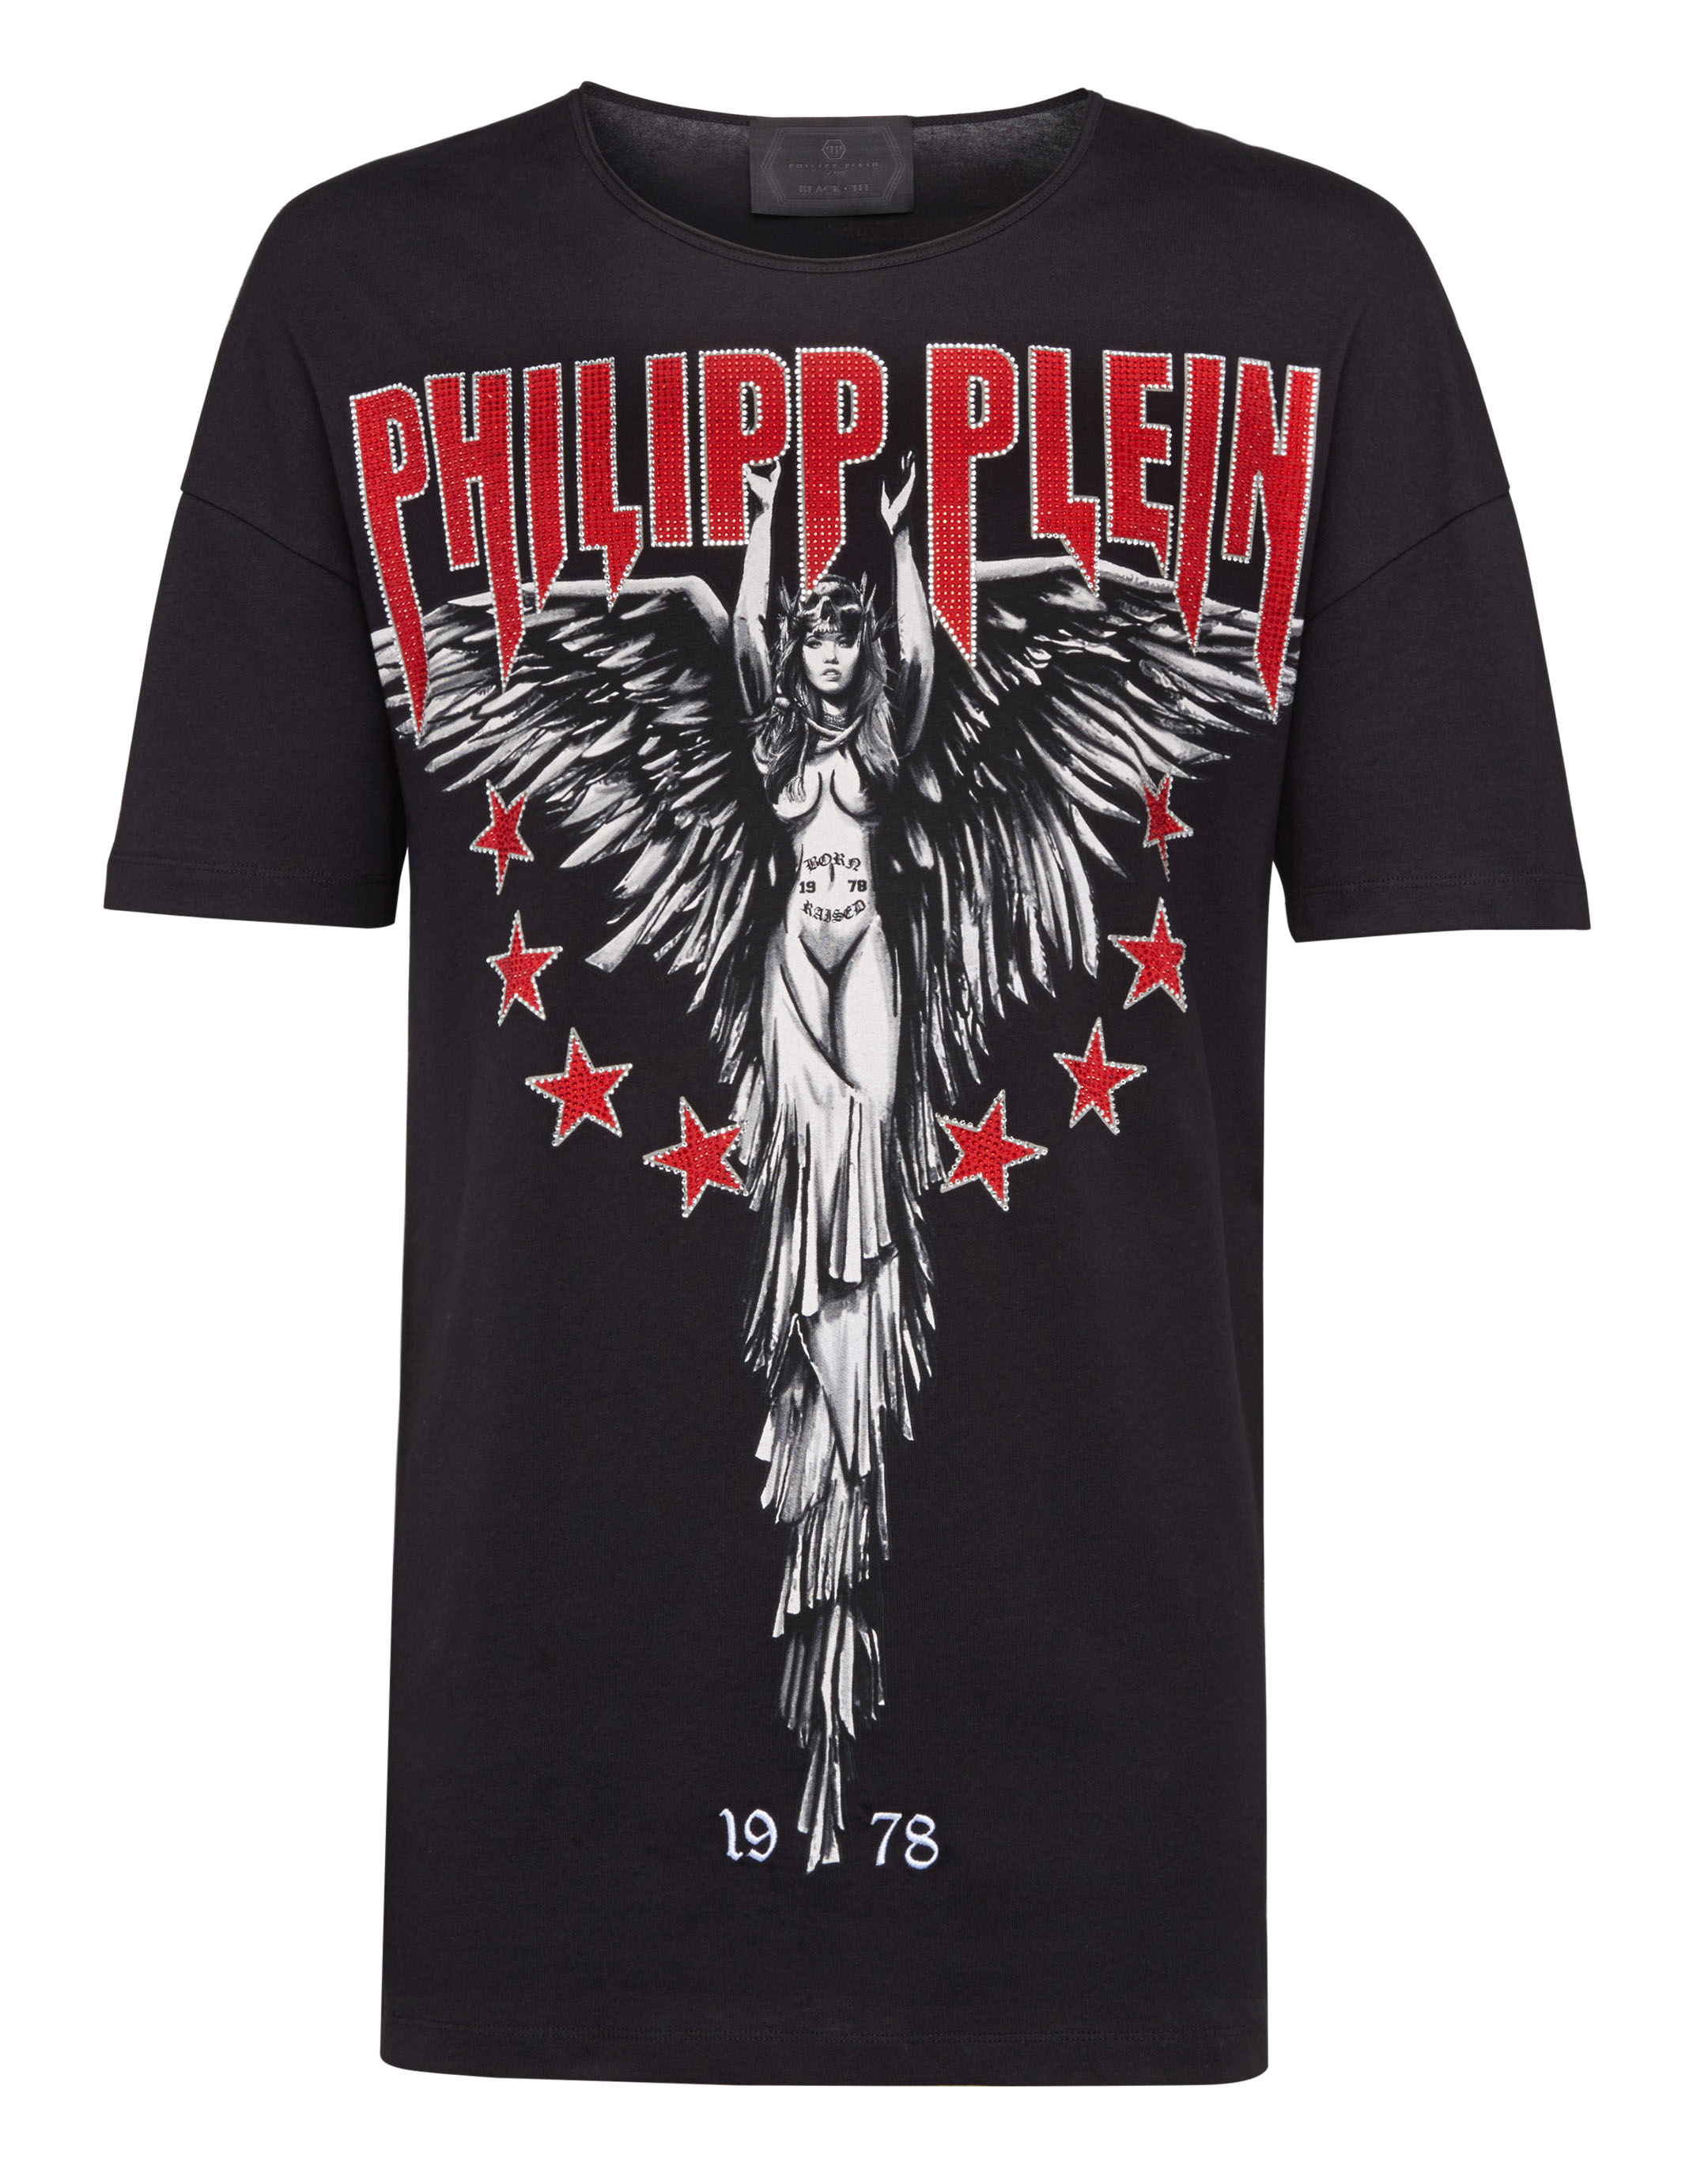 philipp plein angel t shirt